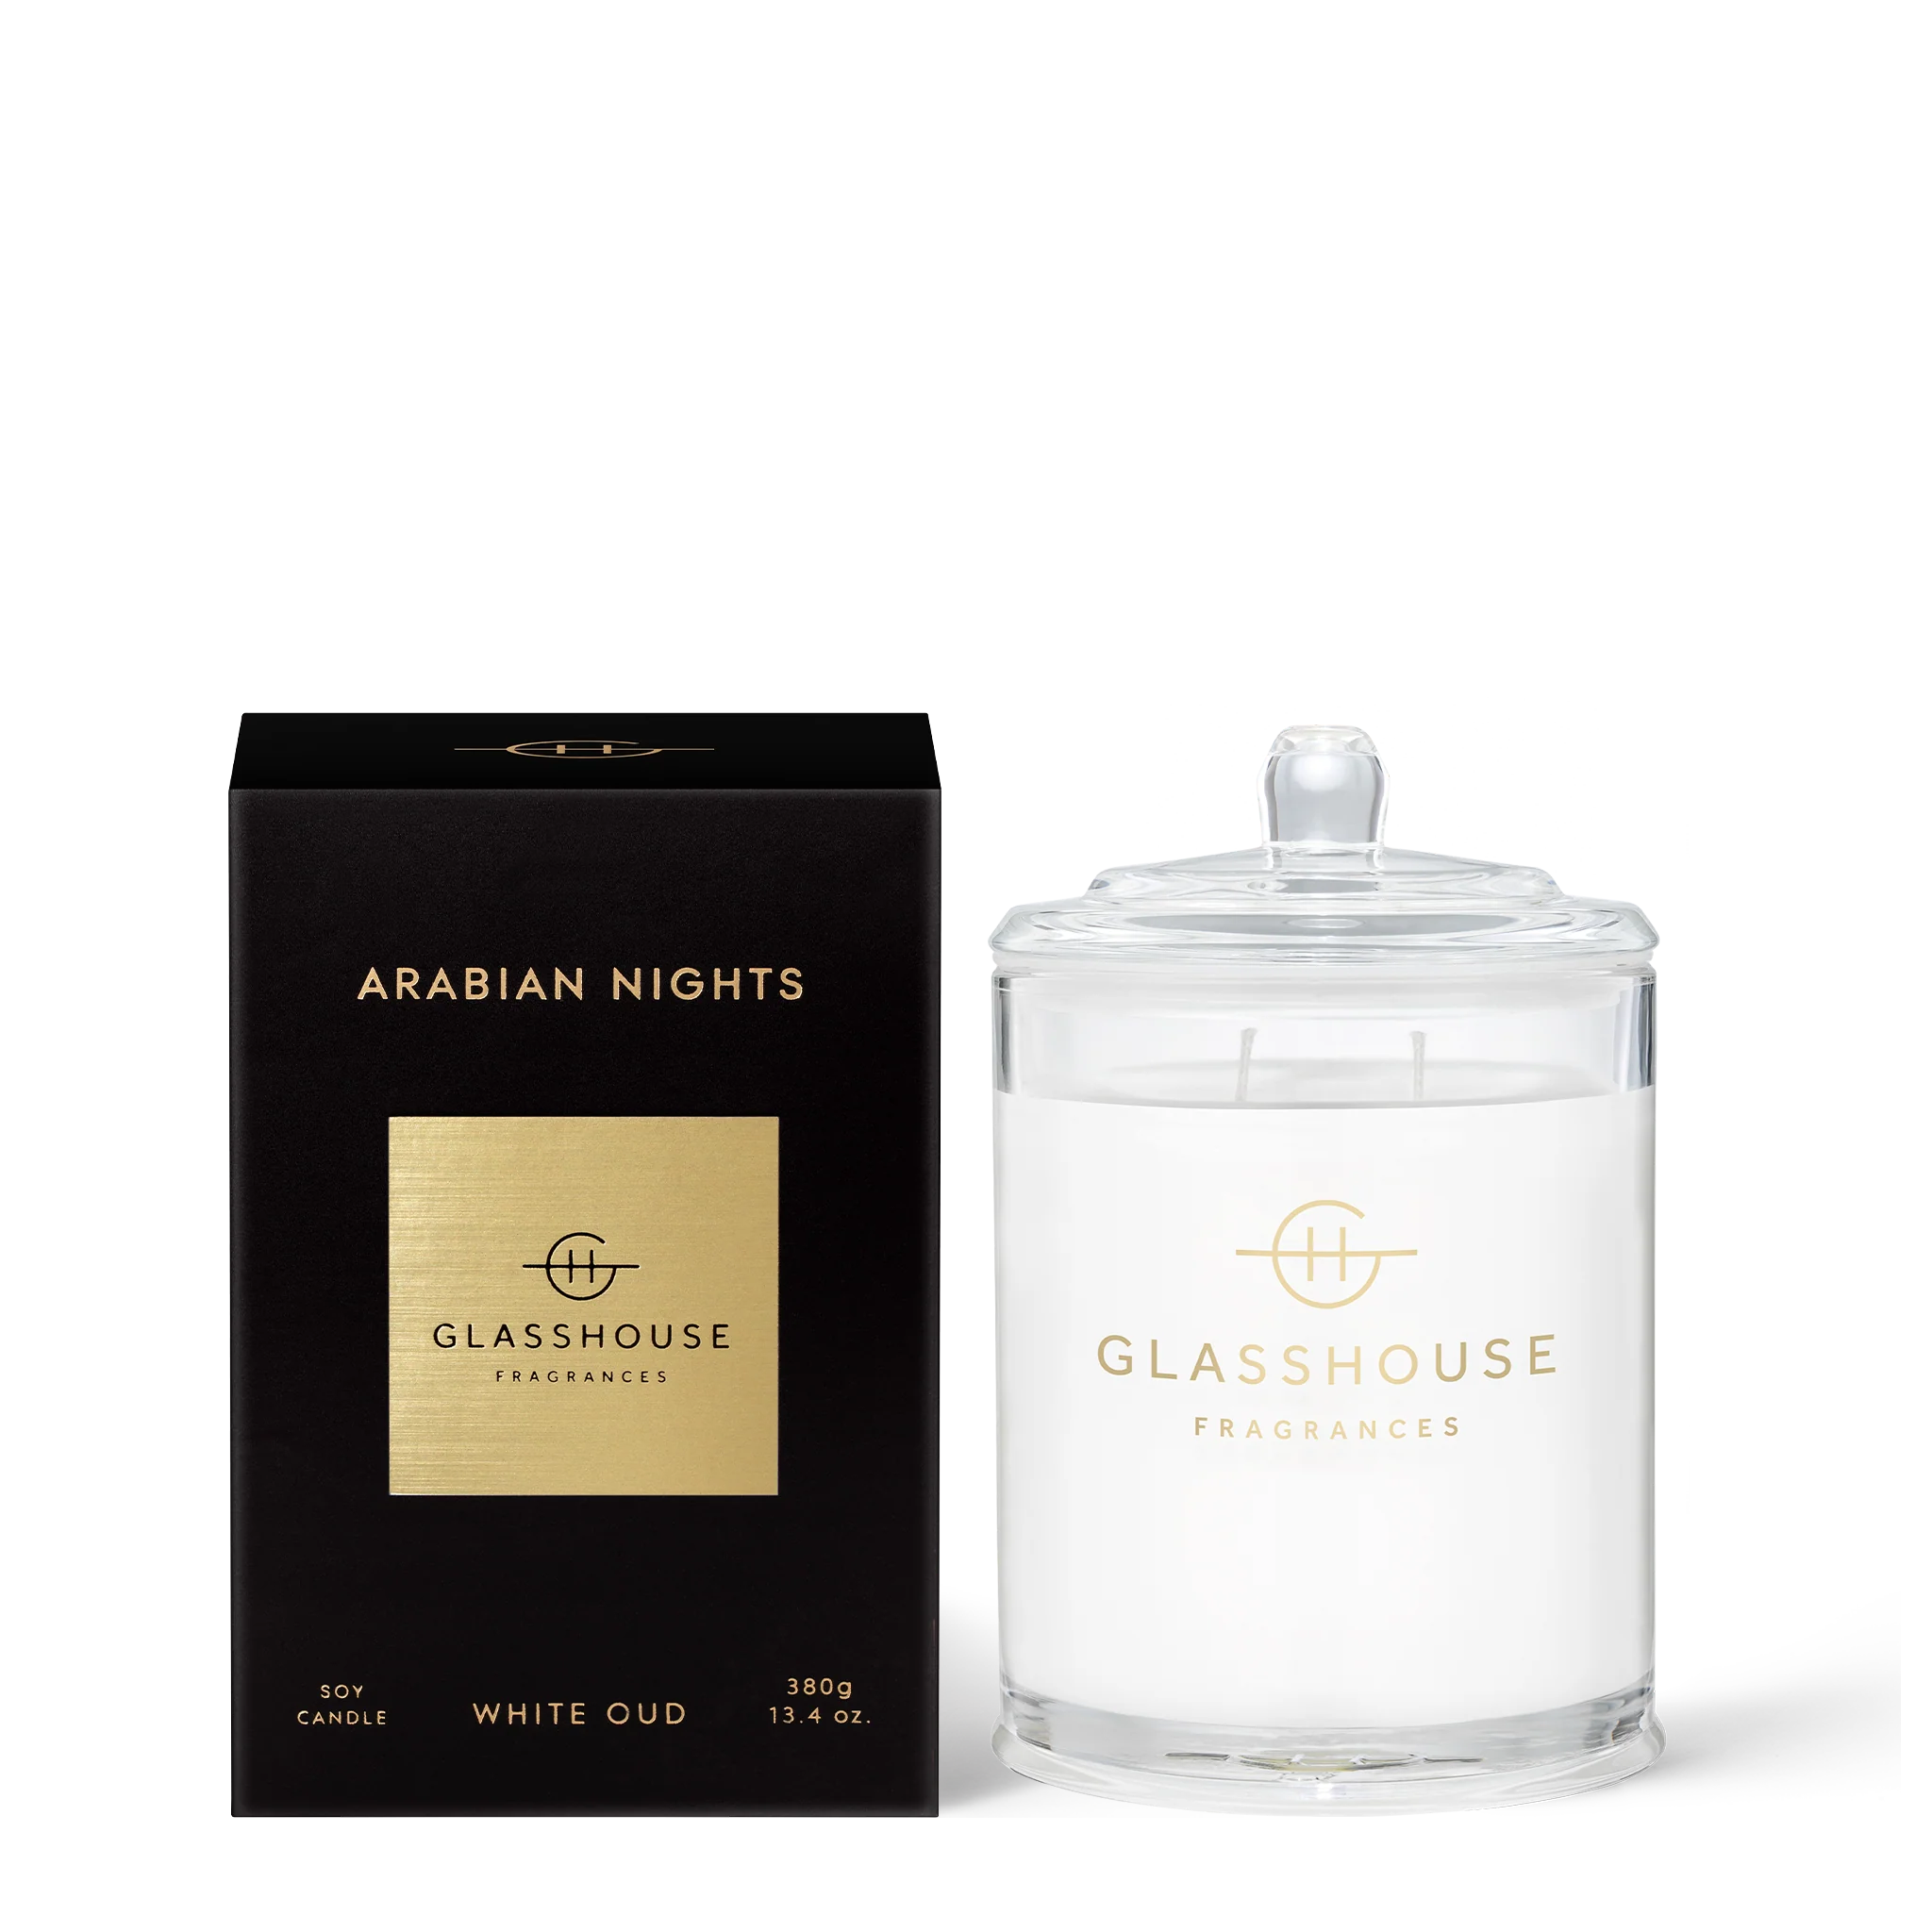 ARABIAN NIGHTS-Glasshouse Fragrances